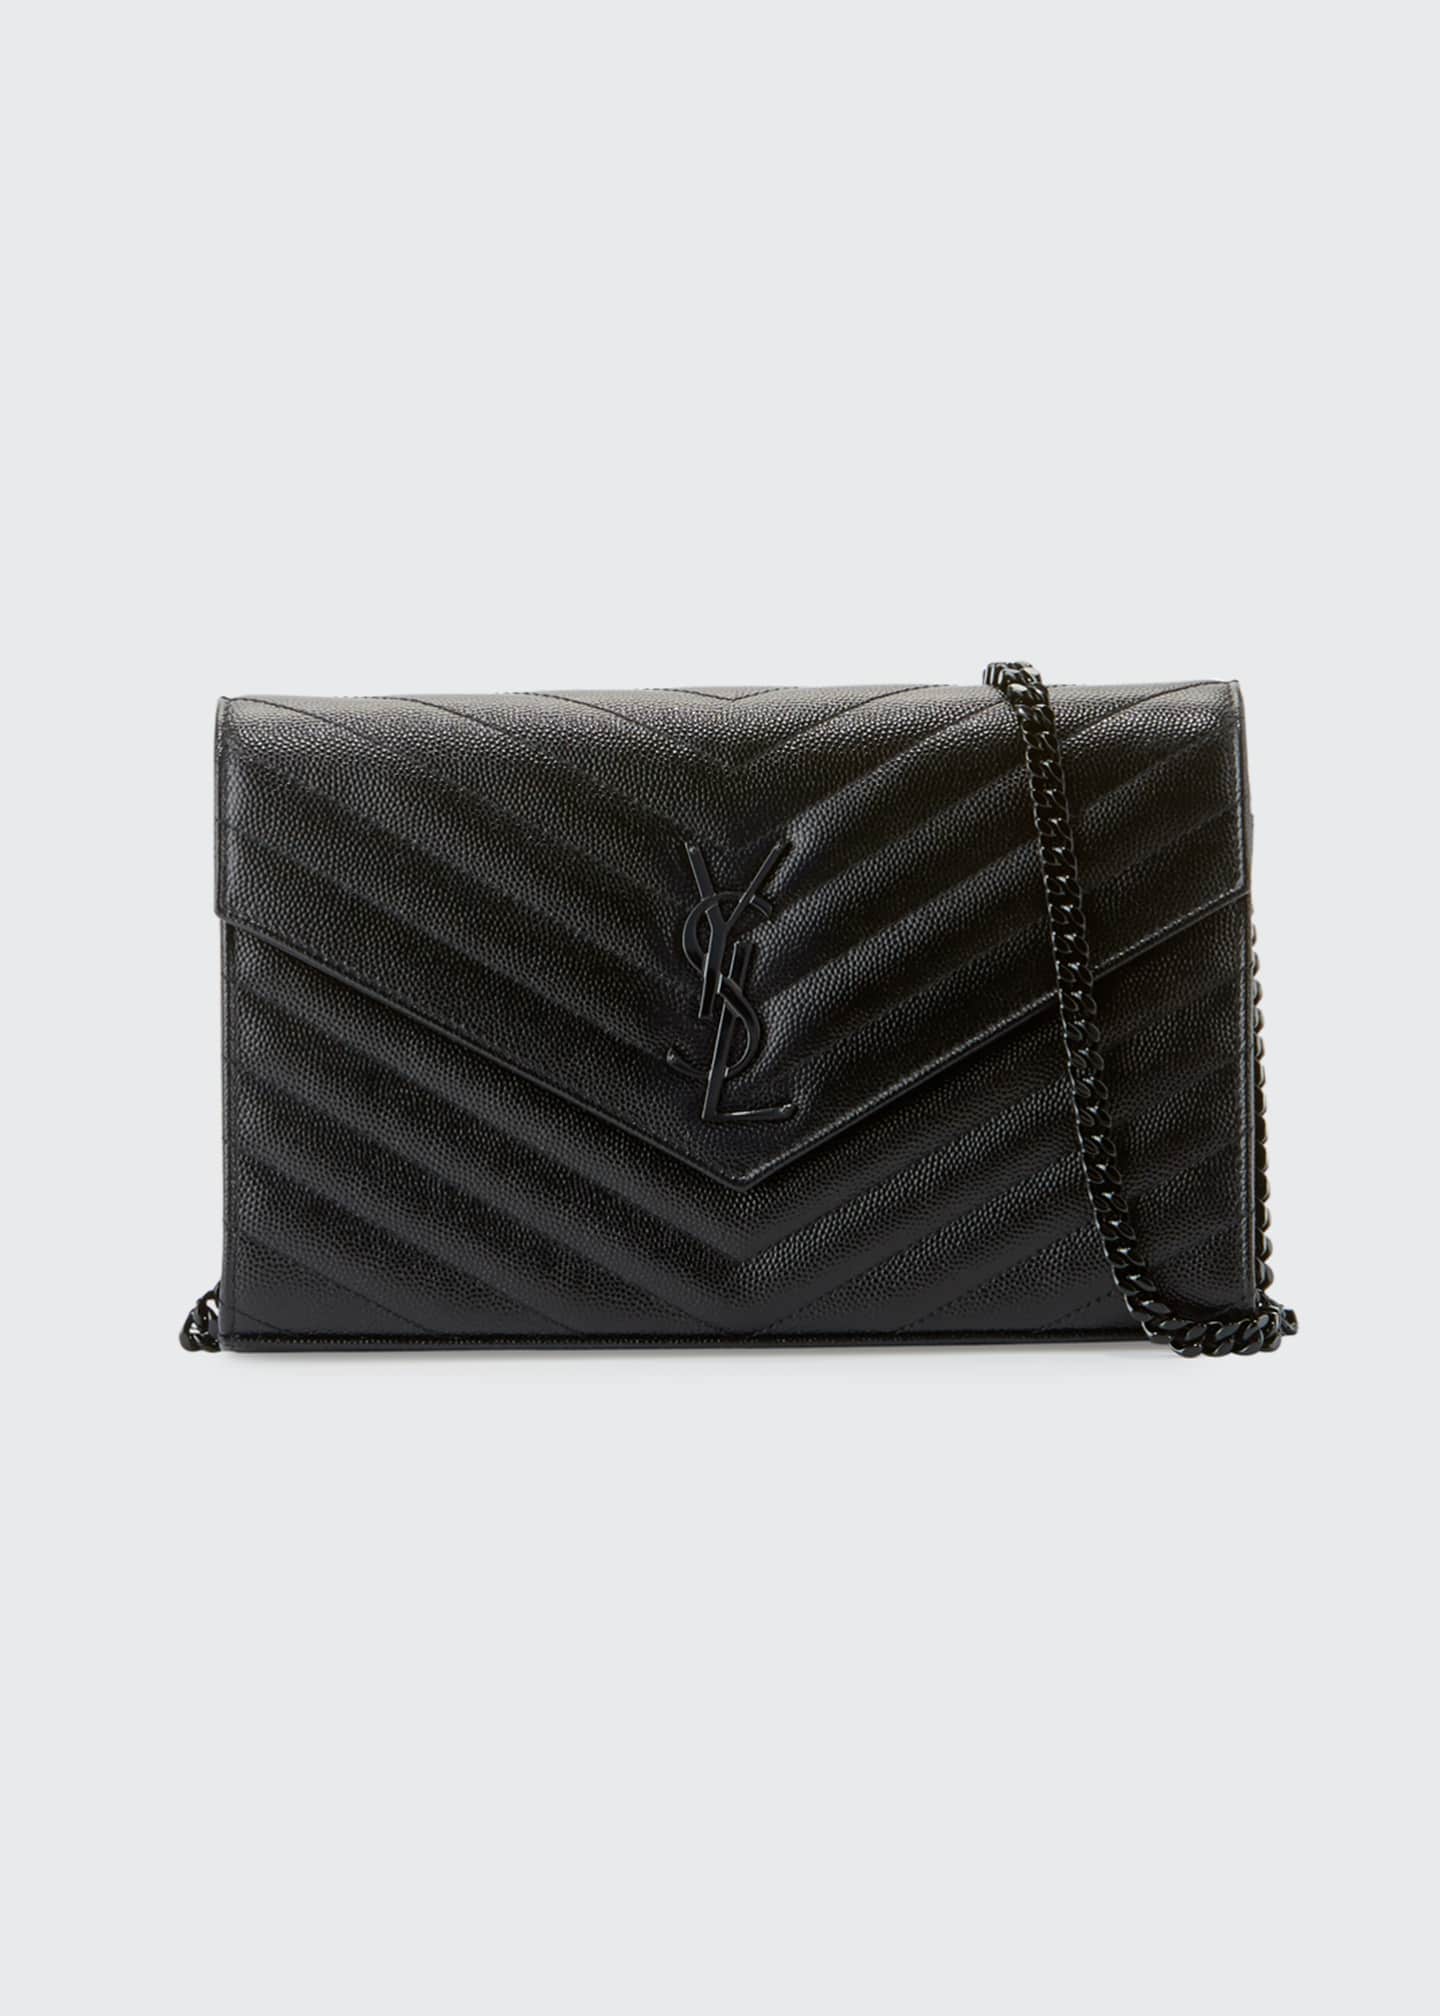 ysl wallet on chain black on black